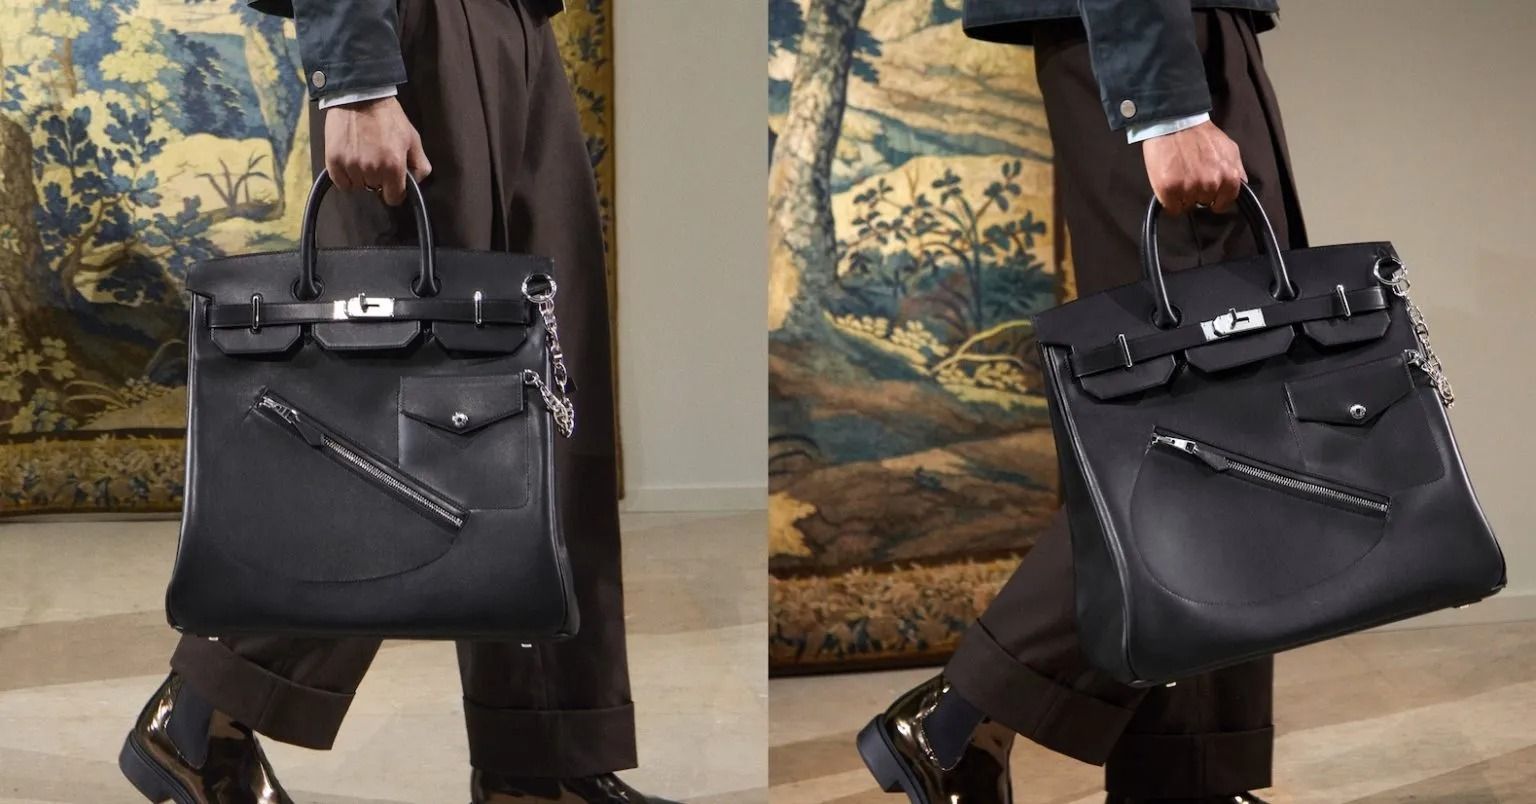 The Hermès Birkin Reigns as the Most-Coveted Luxury Handbag